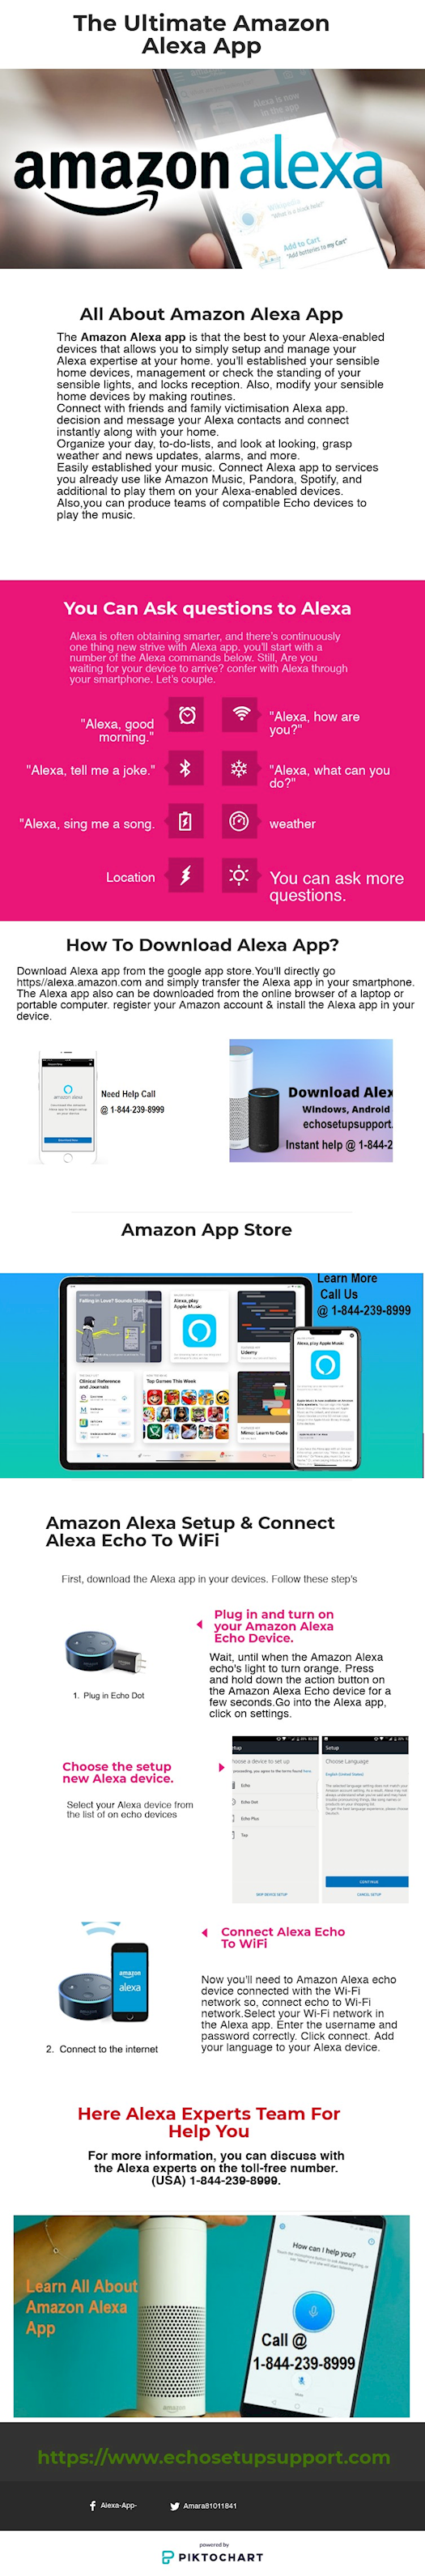 All About Amazon Alexa App